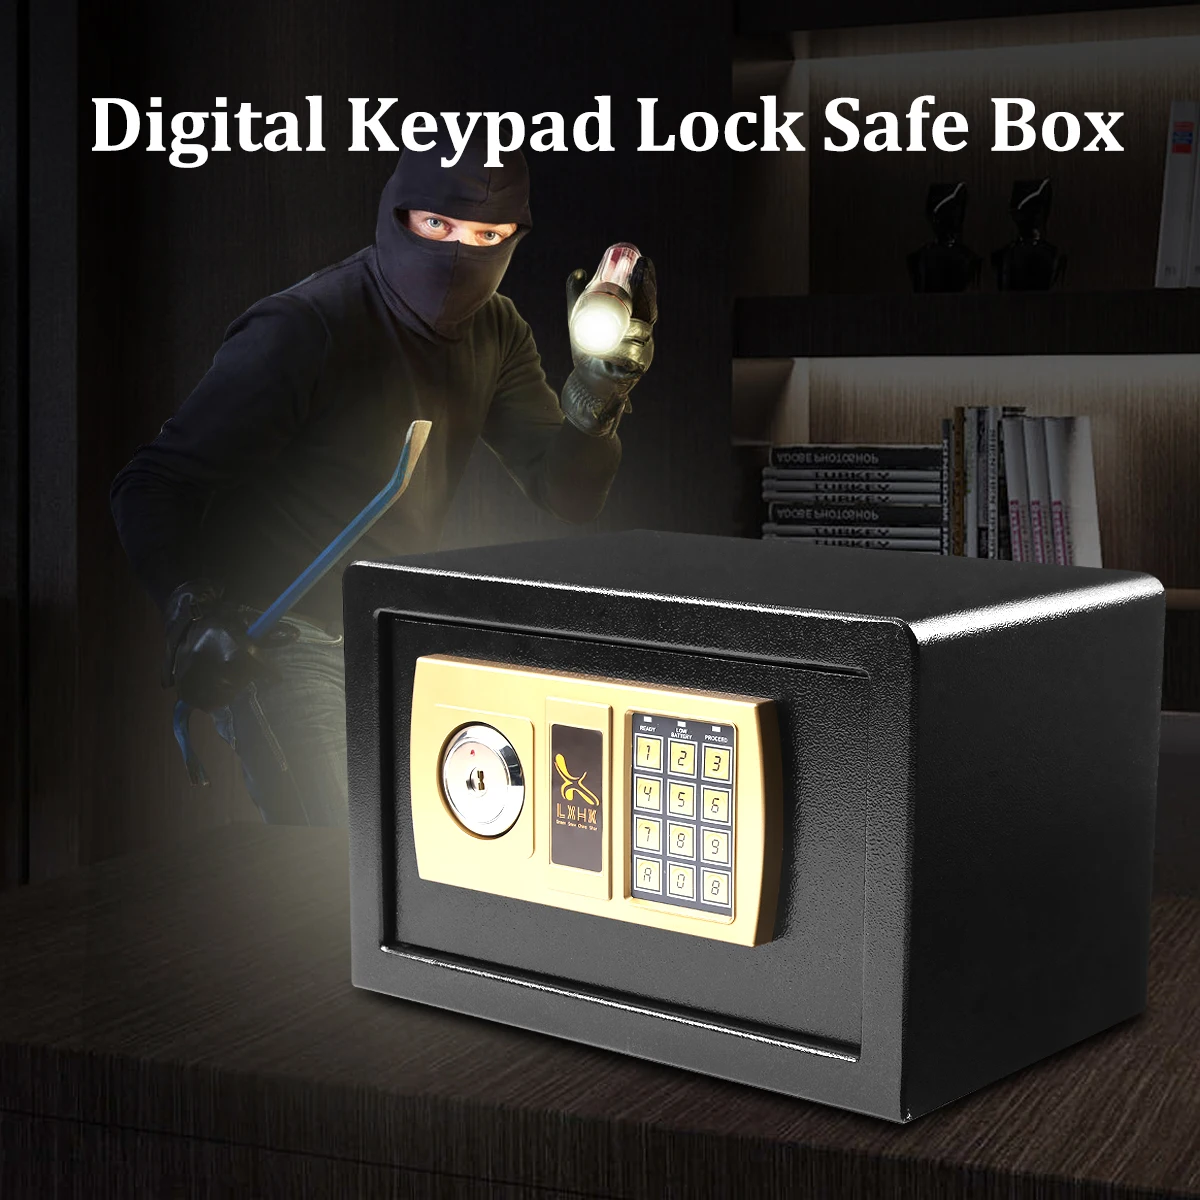 

Safurance Luxury Digital Depository Drop Cash Safe Box Jewelry Home Hotel Lock Keypad Black Safety Security Box 2018 Brand New